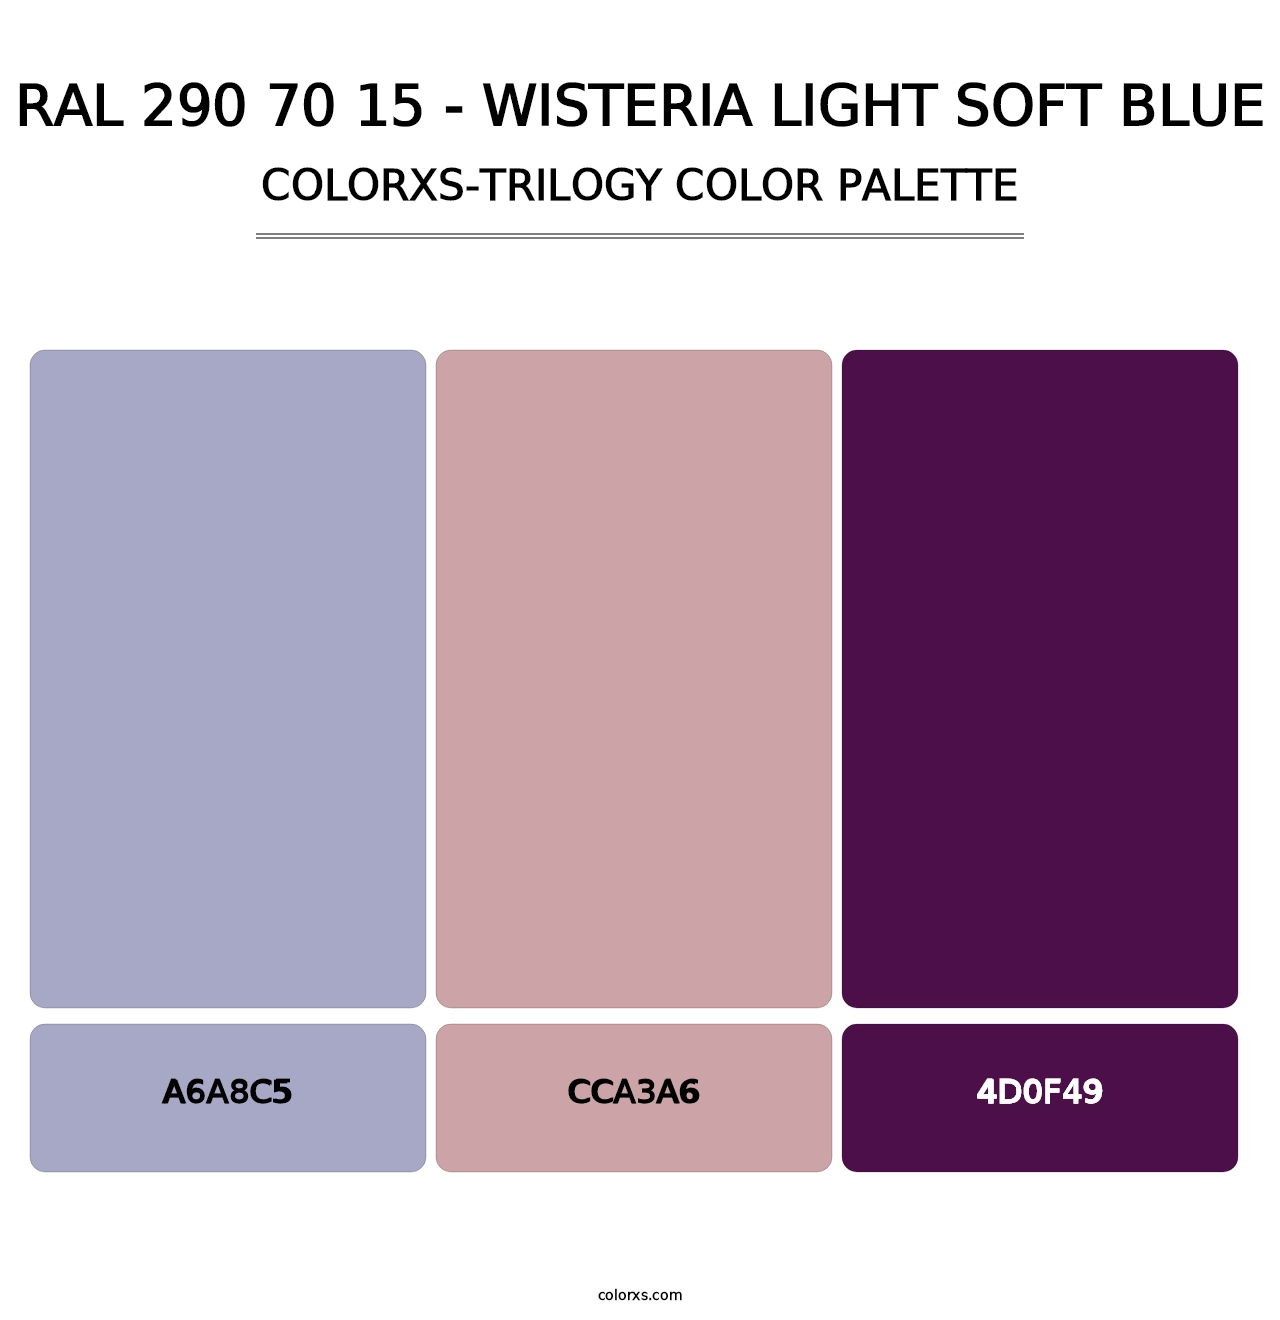 RAL 290 70 15 - Wisteria Light Soft Blue - Colorxs Trilogy Palette